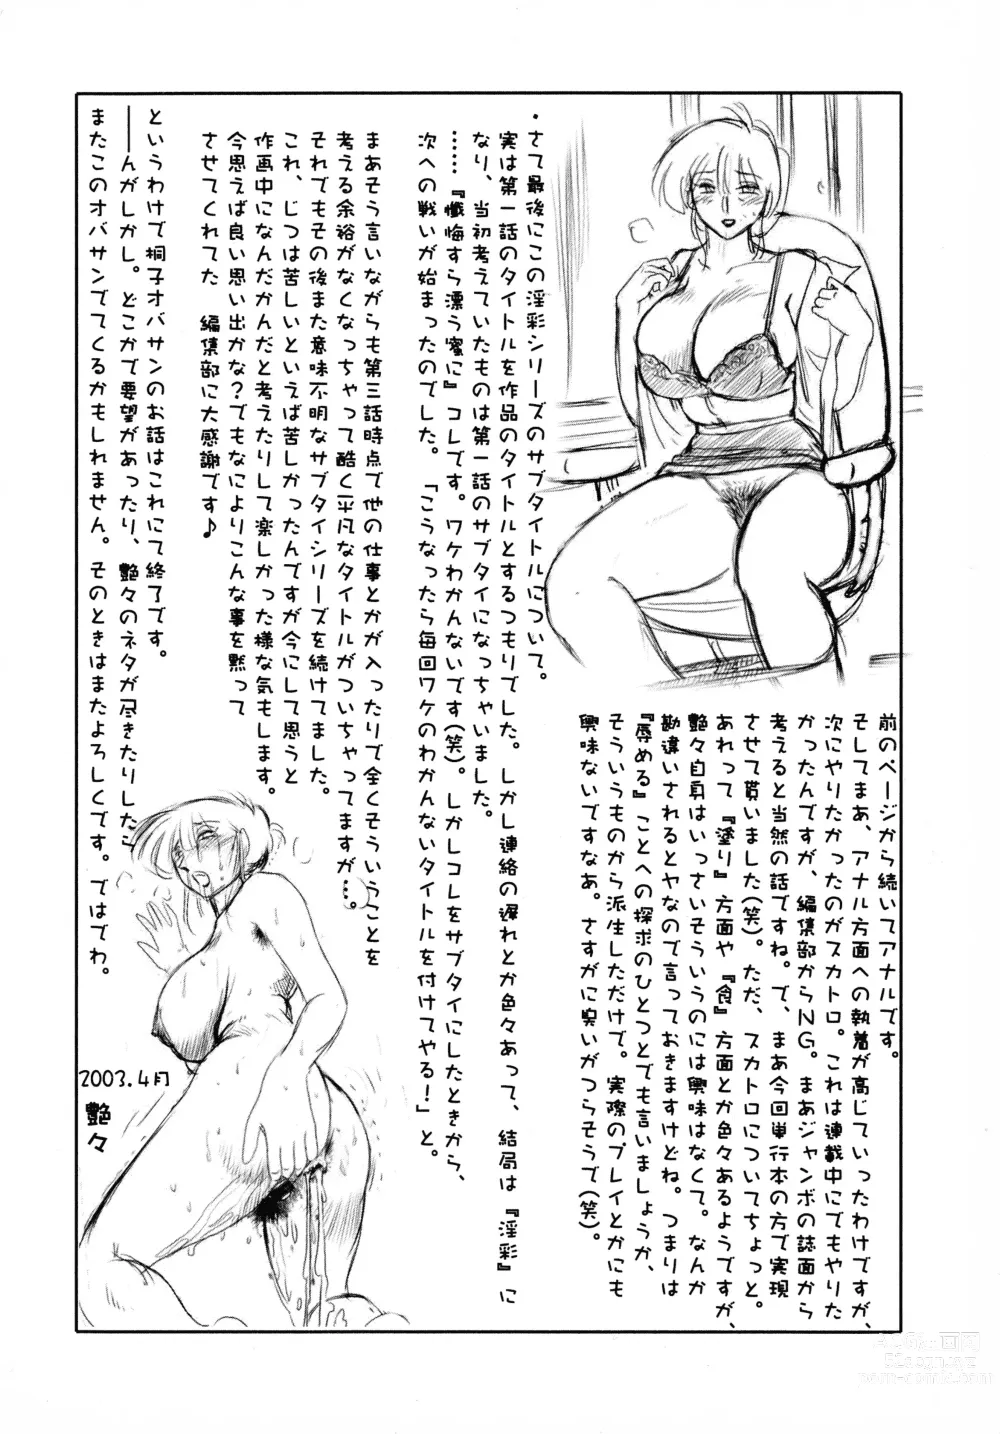 Page 186 of manga Kono Onna wa Yoru ni Naku - This lady groans at night